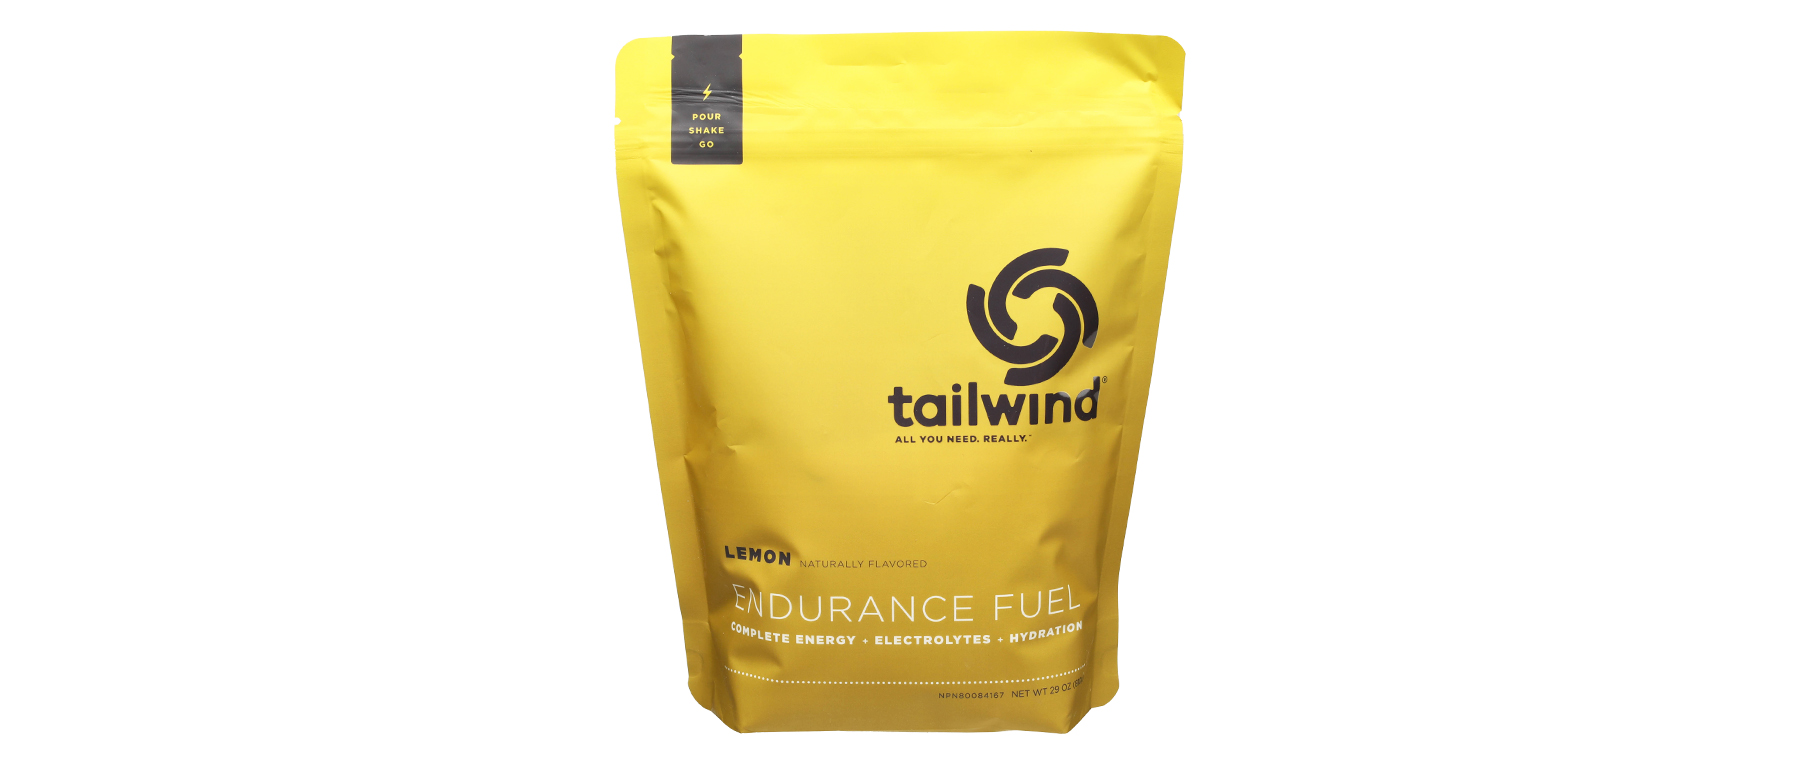 Tailwind Endurance Fuel 30-Serving